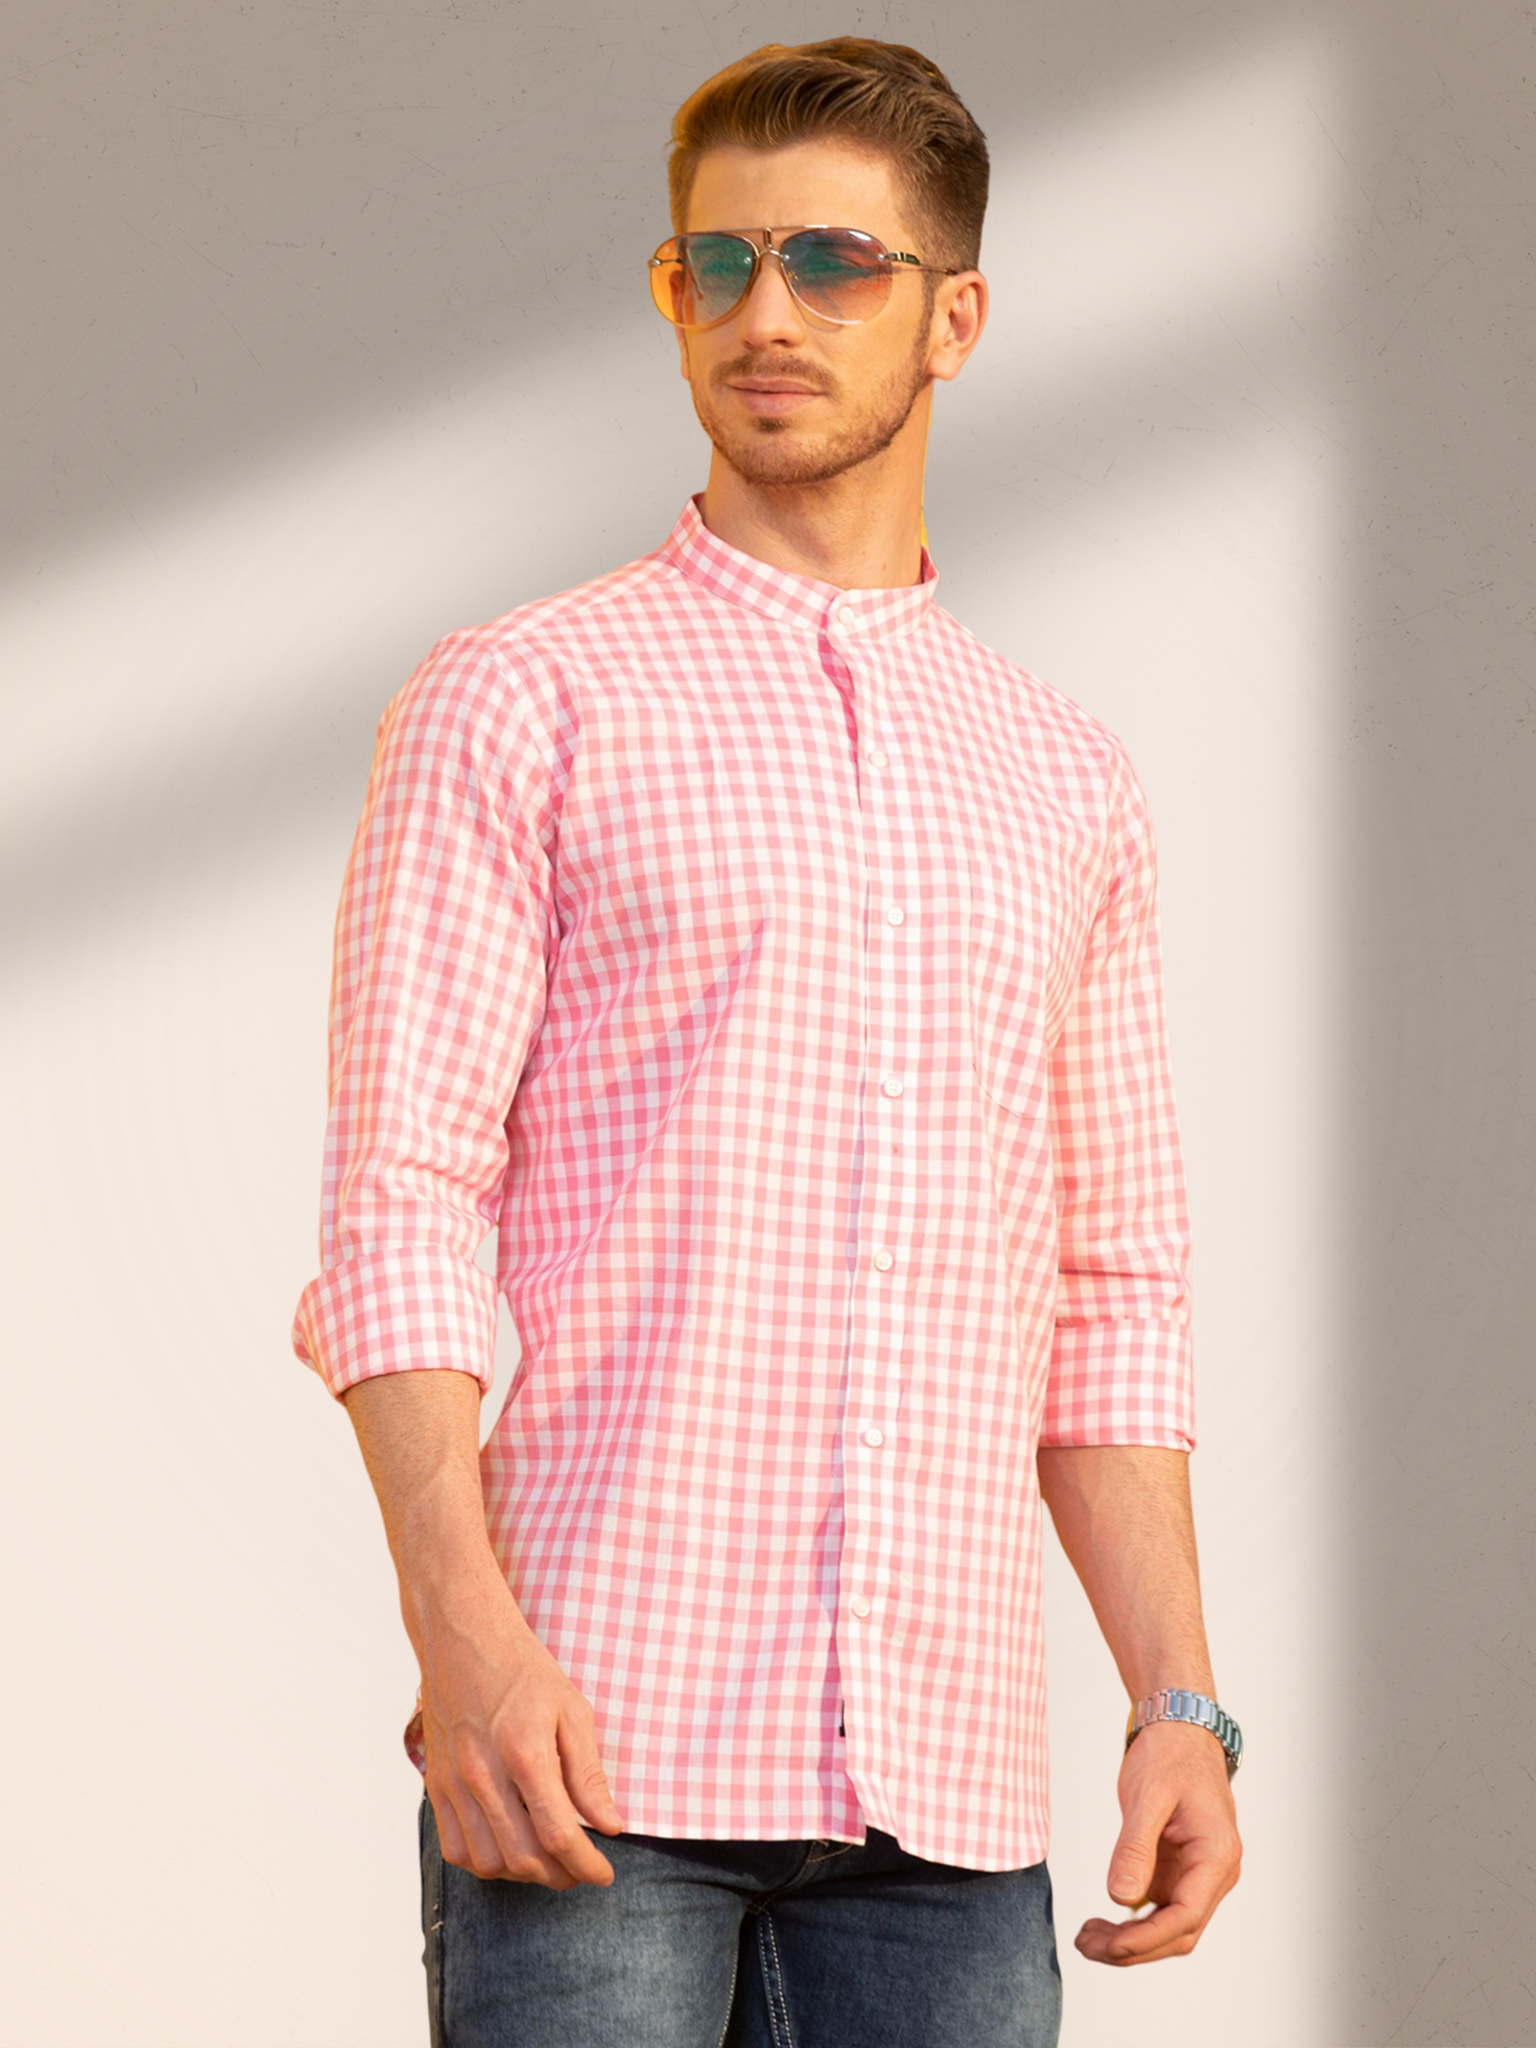 Men's flamingo pink checks shirt